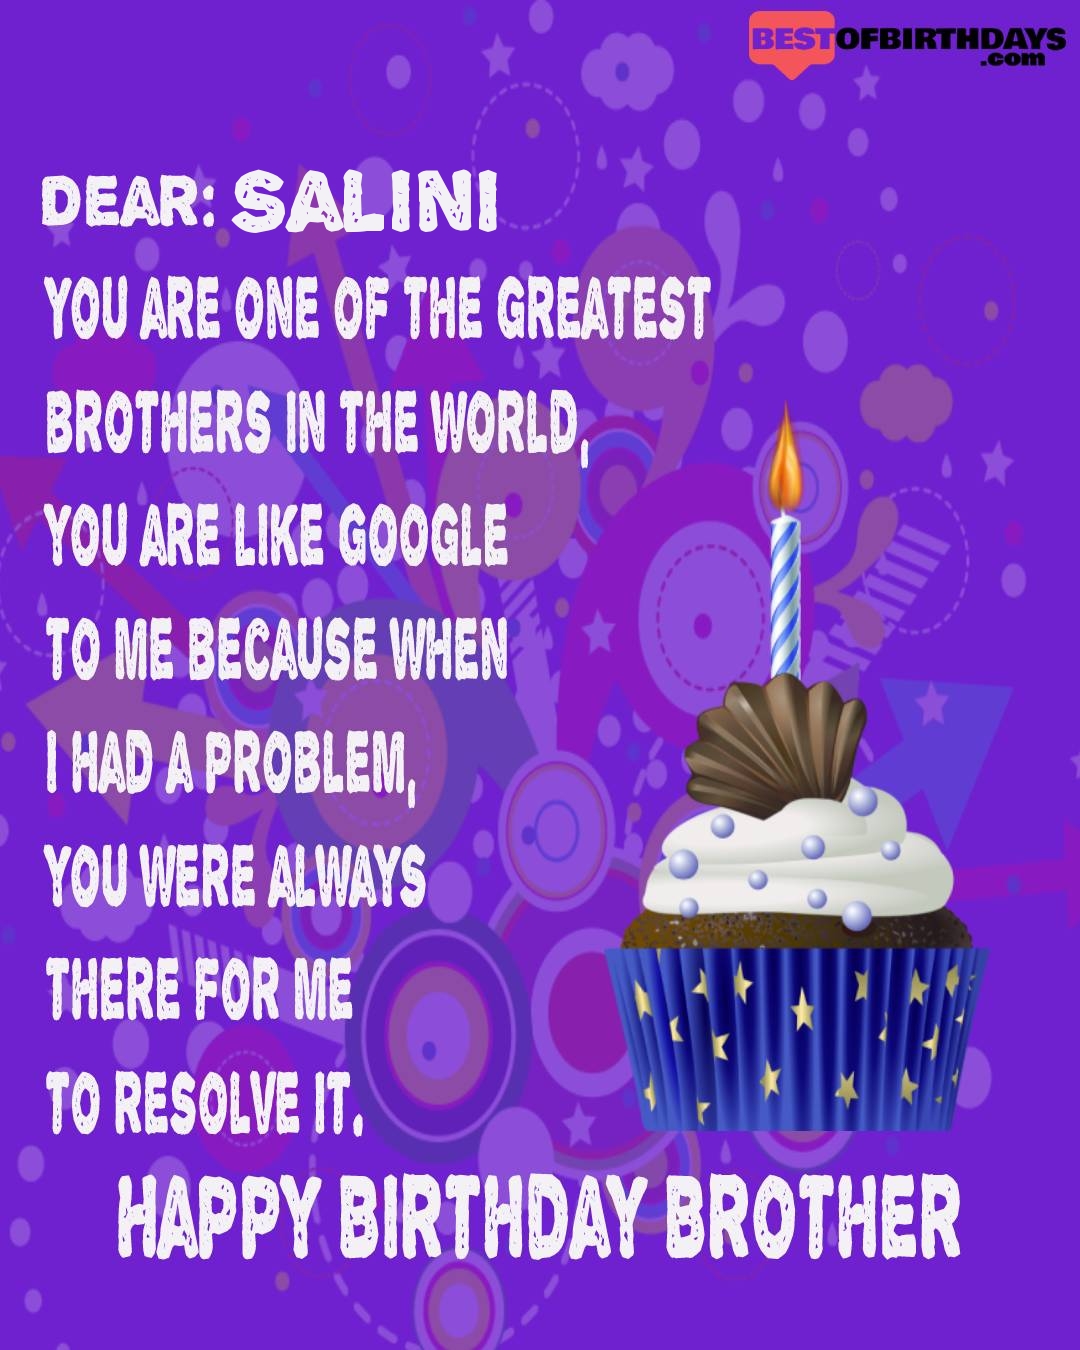 Happy birthday salini bhai brother bro